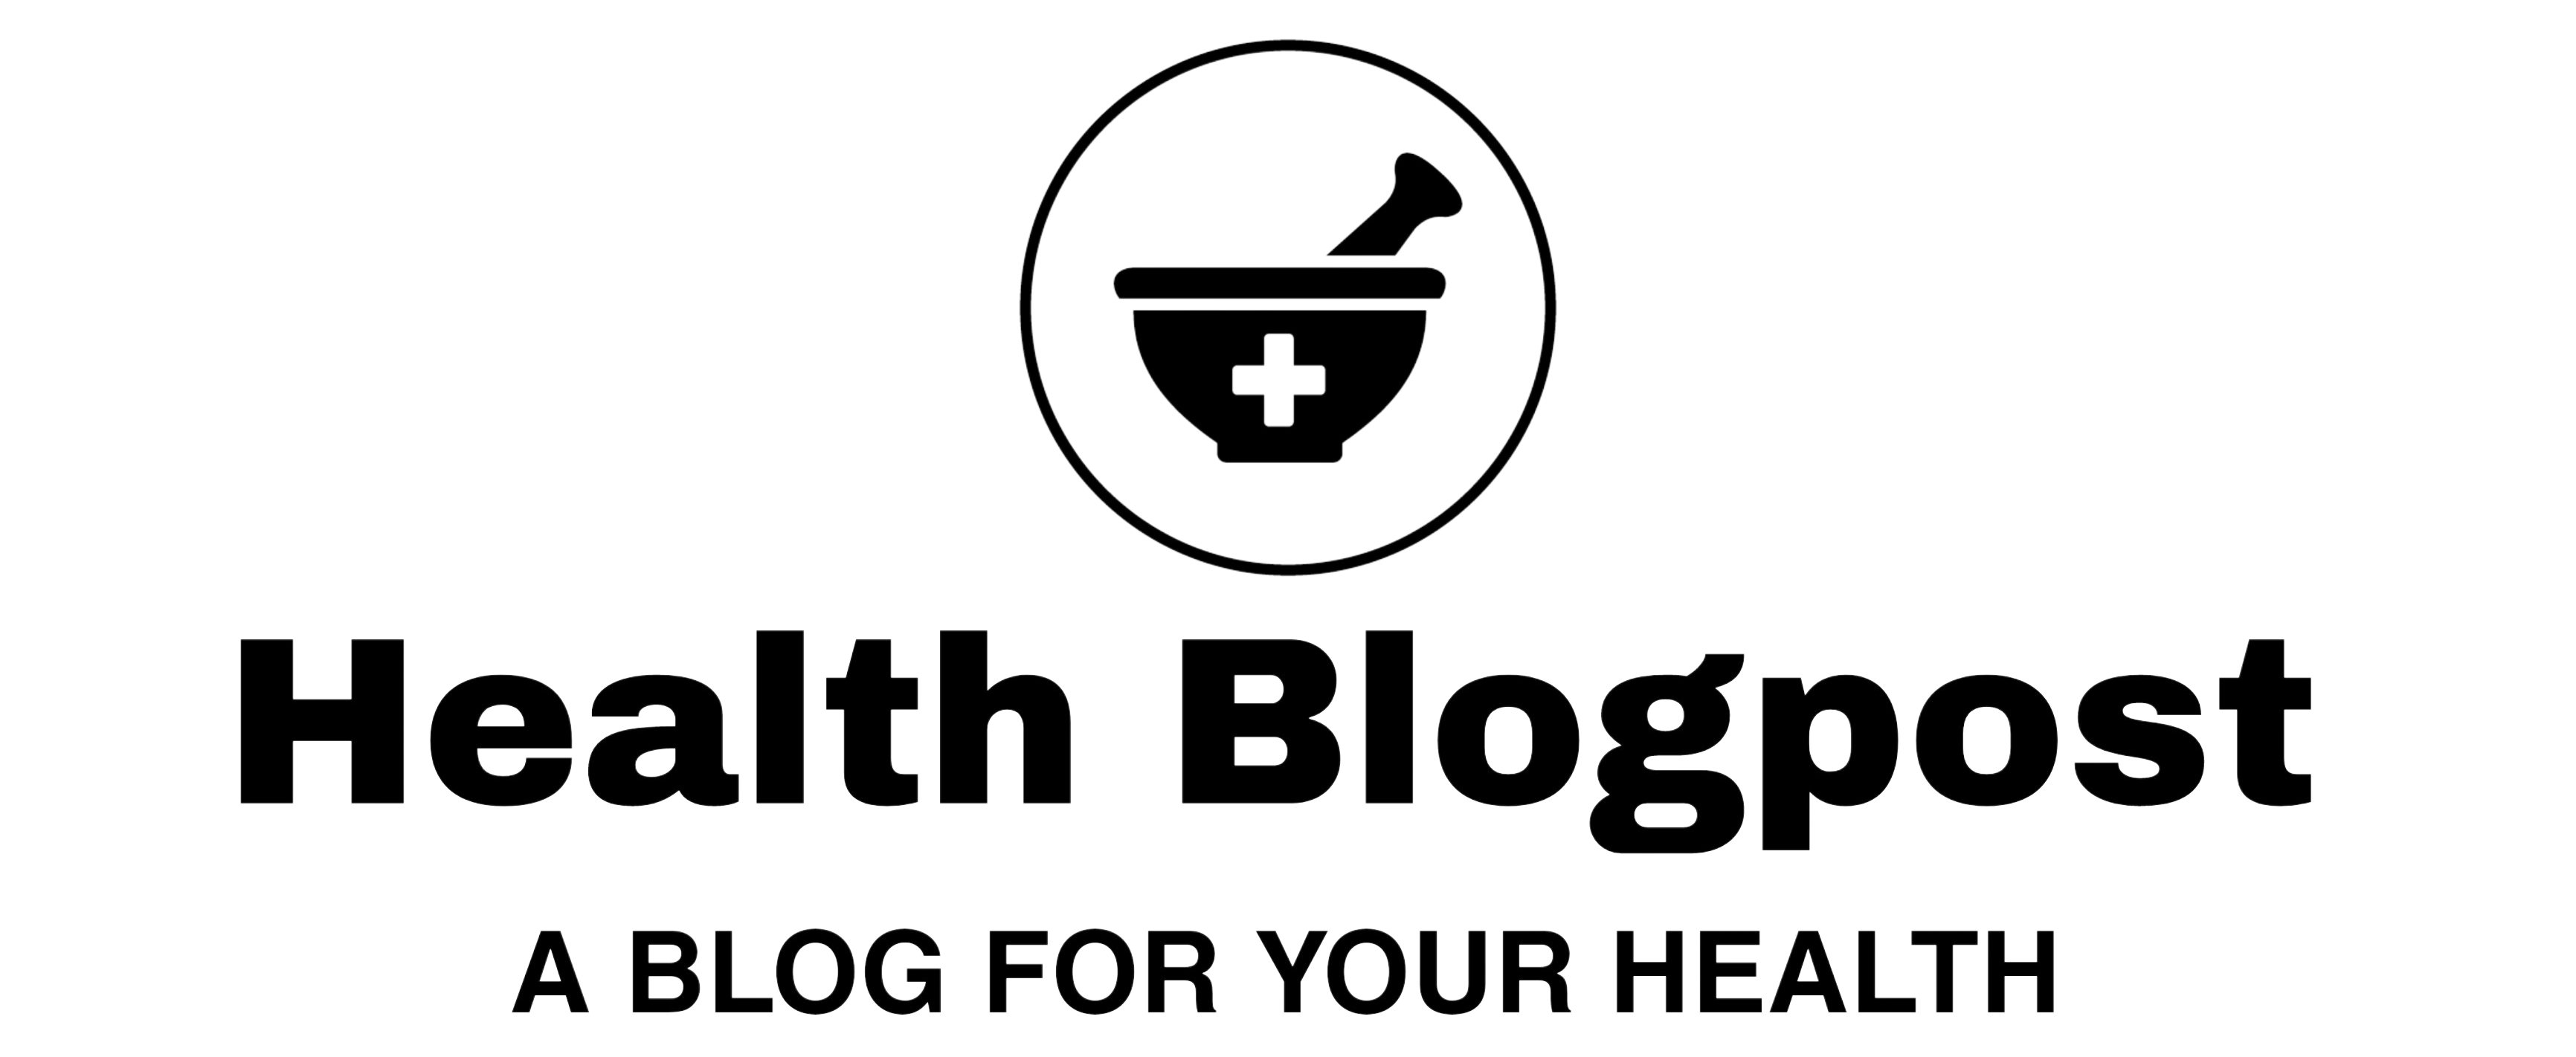 Health Blogpost